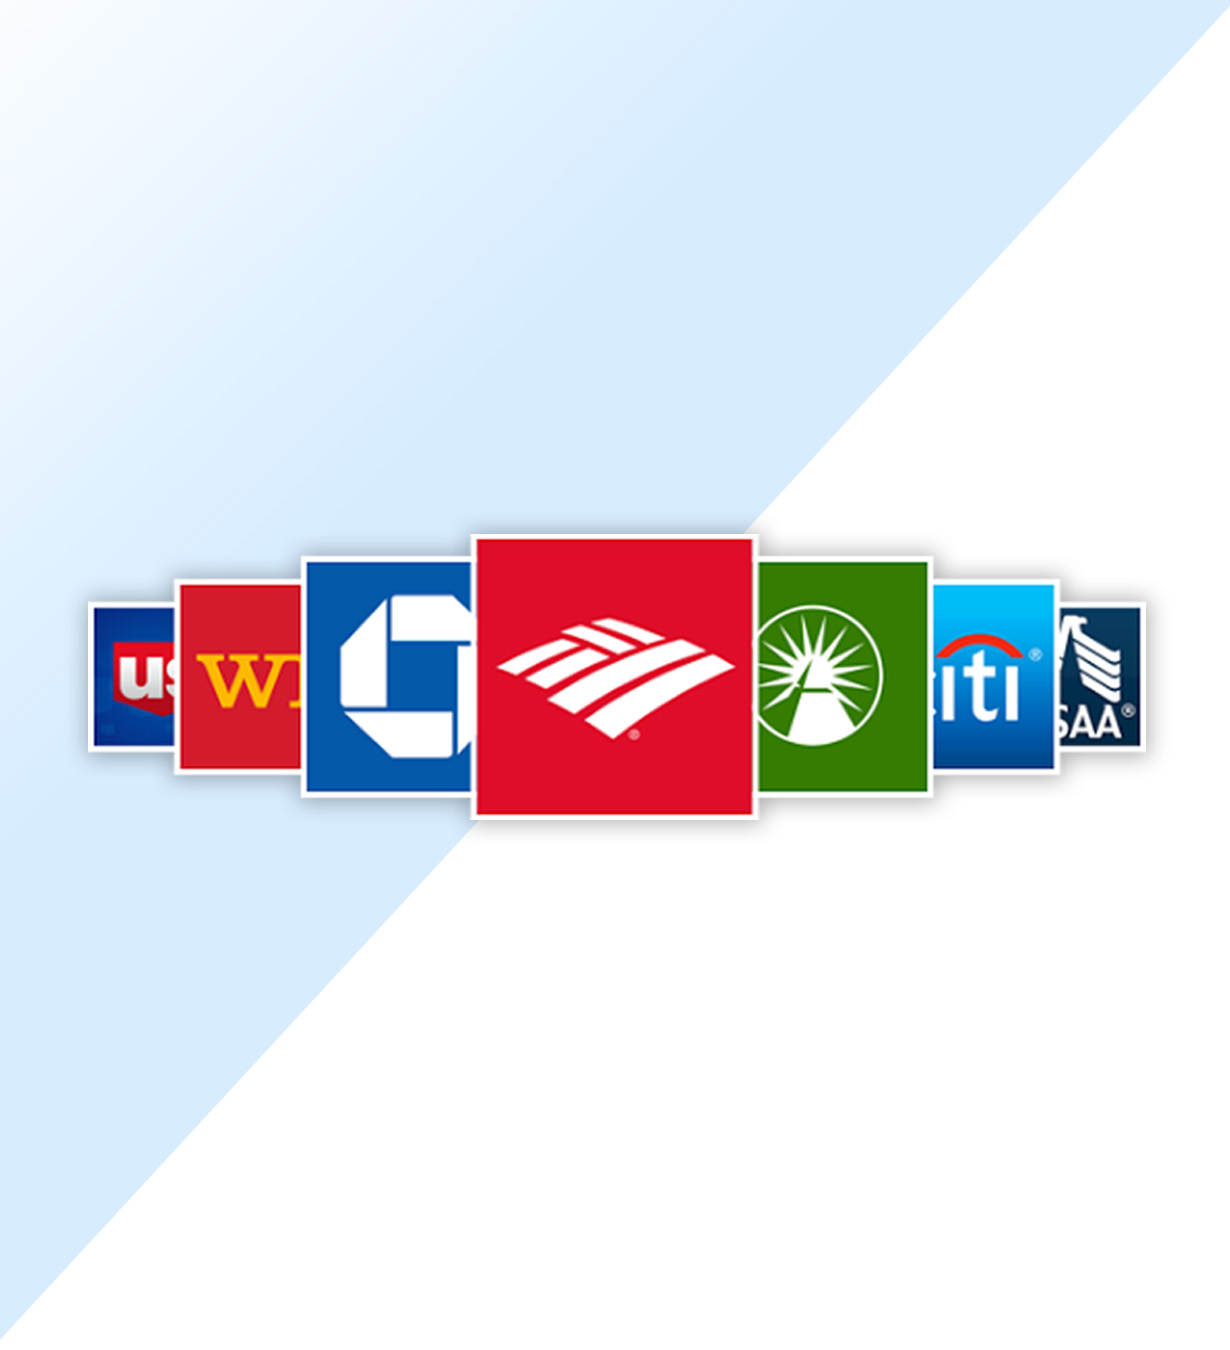 Illustration of bank logos